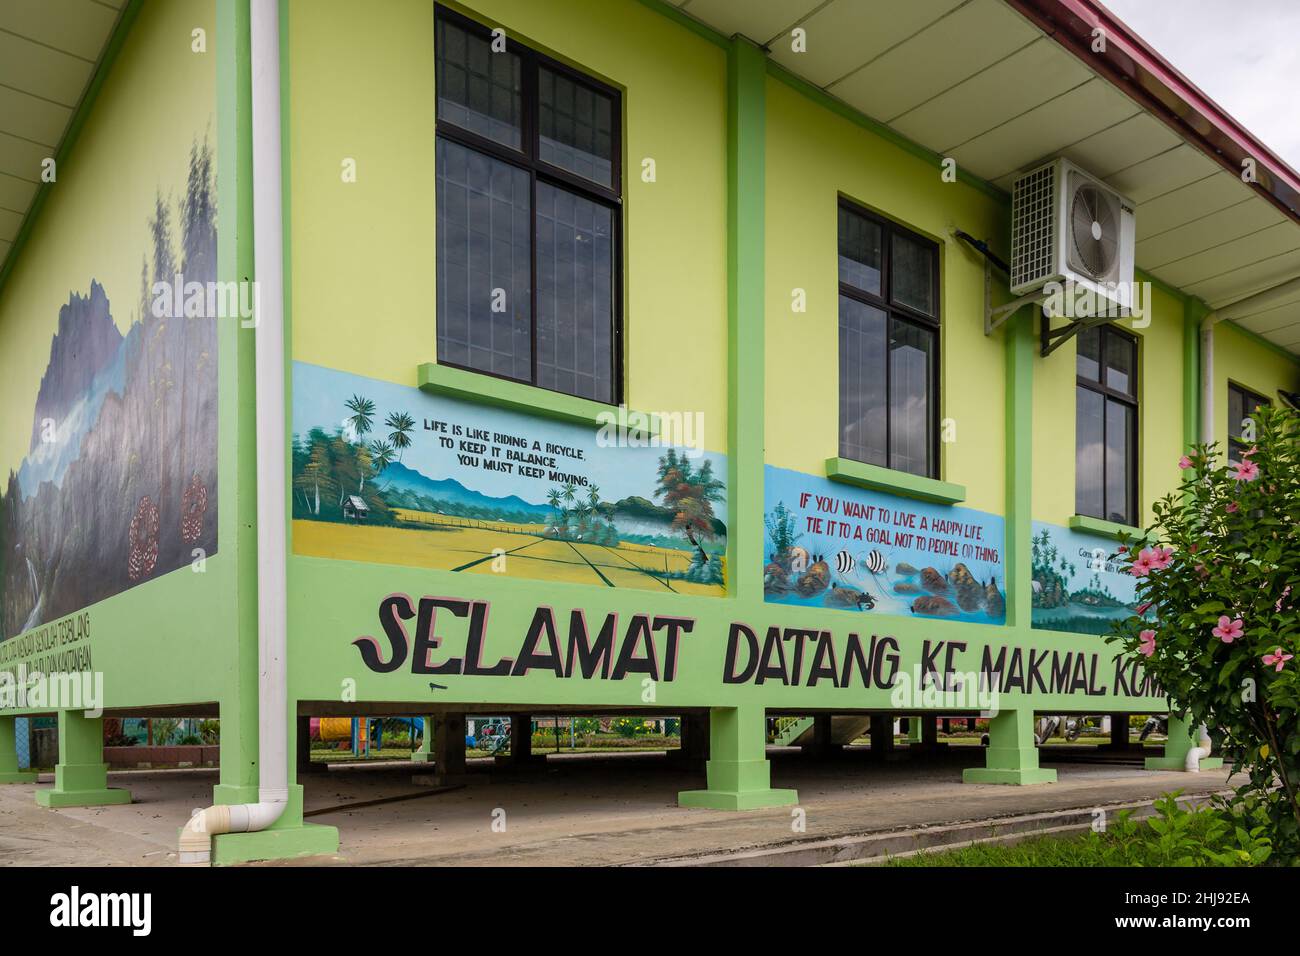 Sekolah Kebangsaan (SK) 'Malangang Baru', a primary school in the village of Malangang in Tuaran District in Sabah, Malaysia Stock Photo